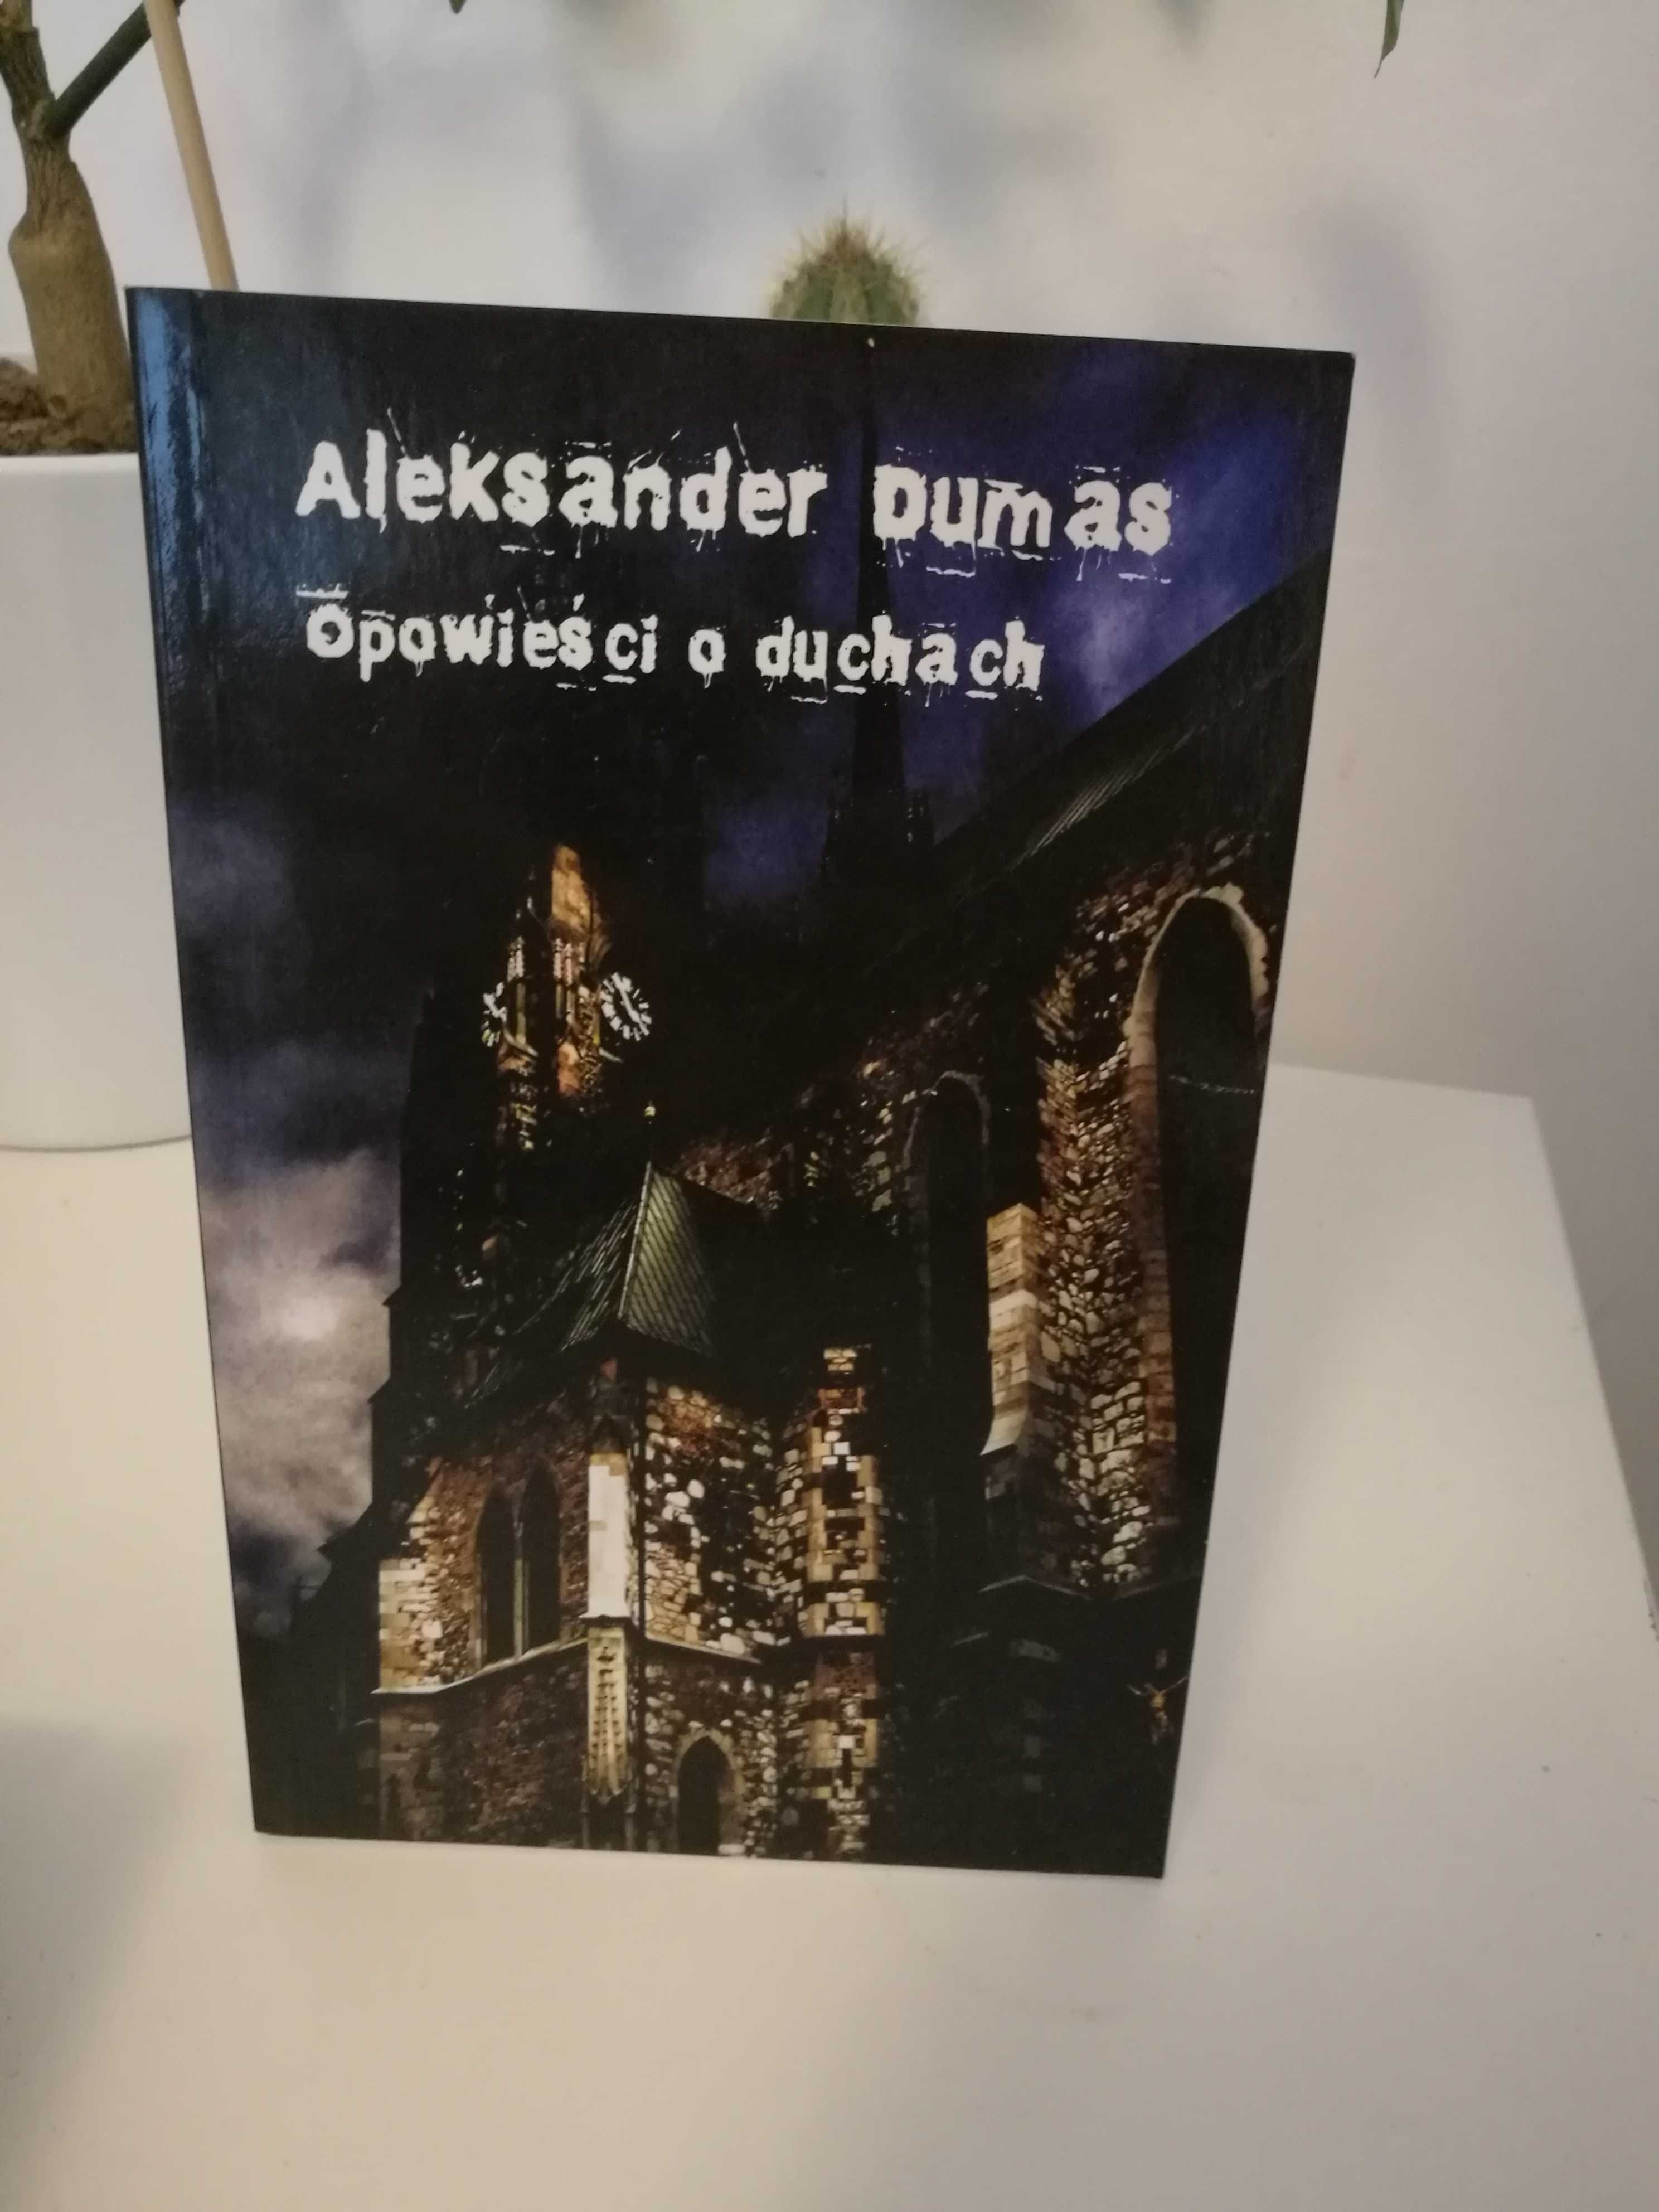 Aleksander Dumas "Opowieści o duchach"